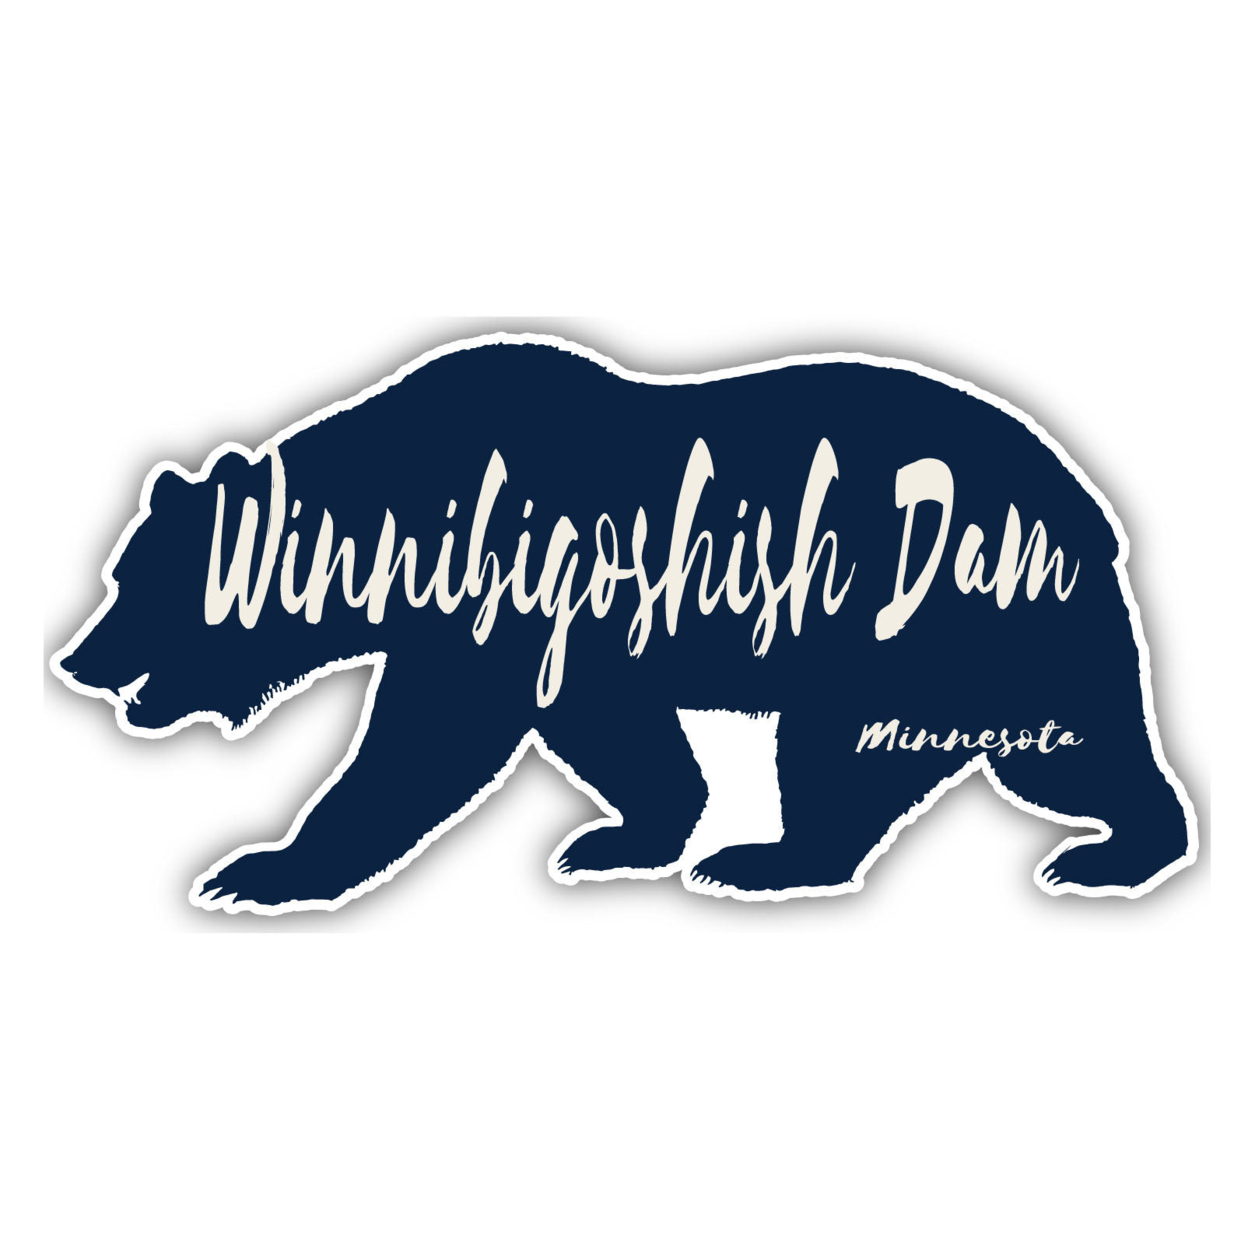 Winnibigoshish Dam Minnesota Souvenir Decorative Stickers (Choose Theme And Size) - Single Unit, 2-Inch, Bear